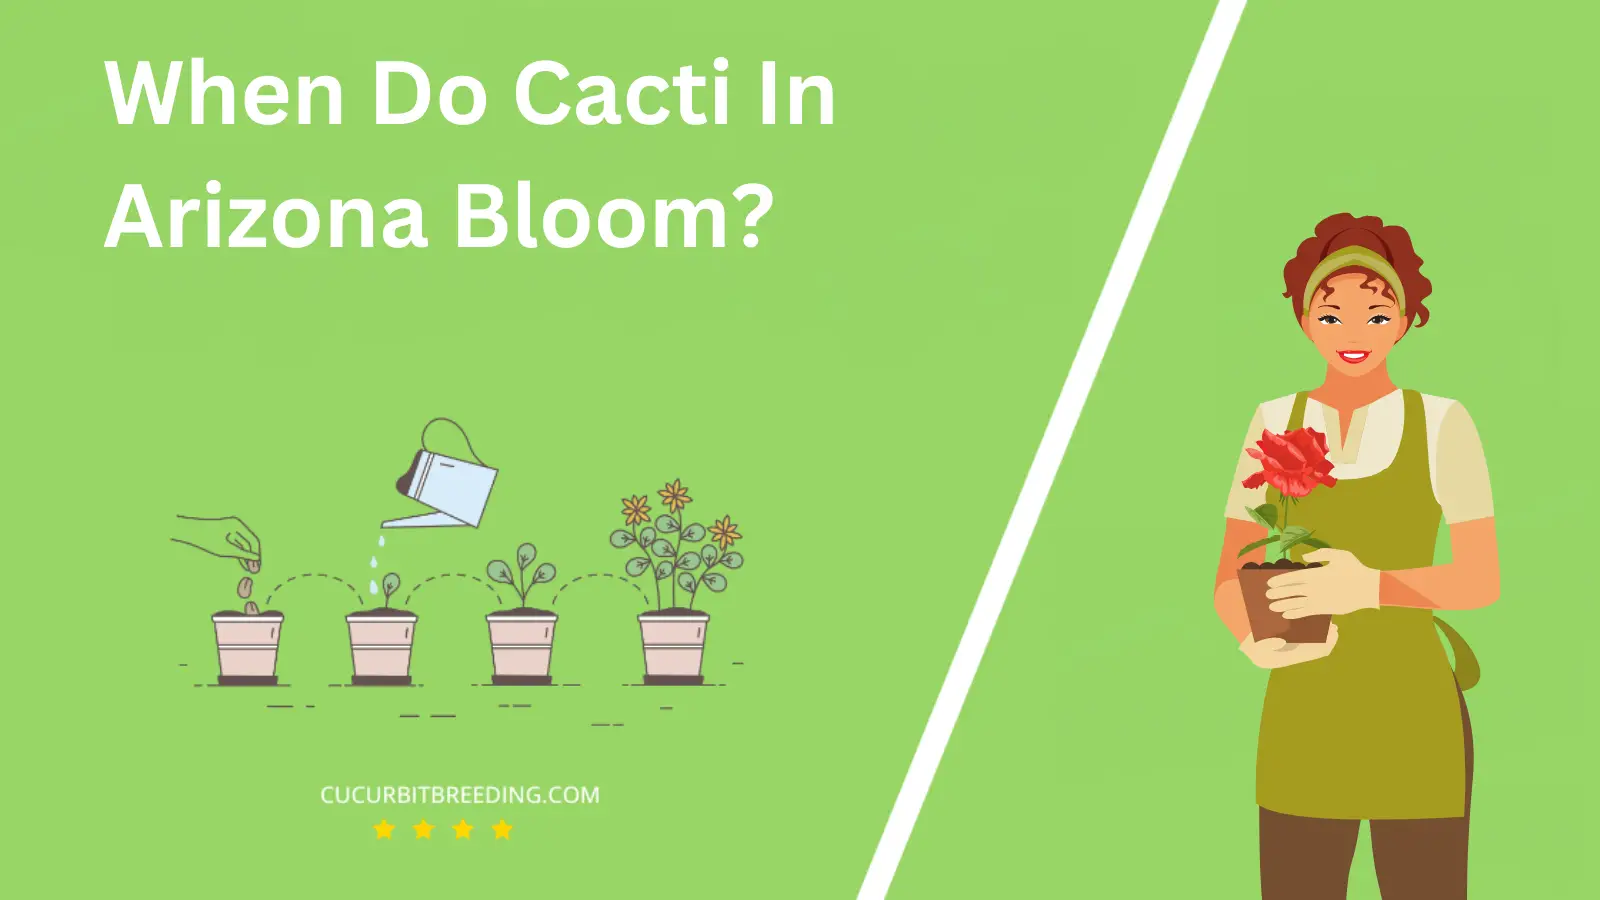 When Do Cacti In Arizona Bloom?